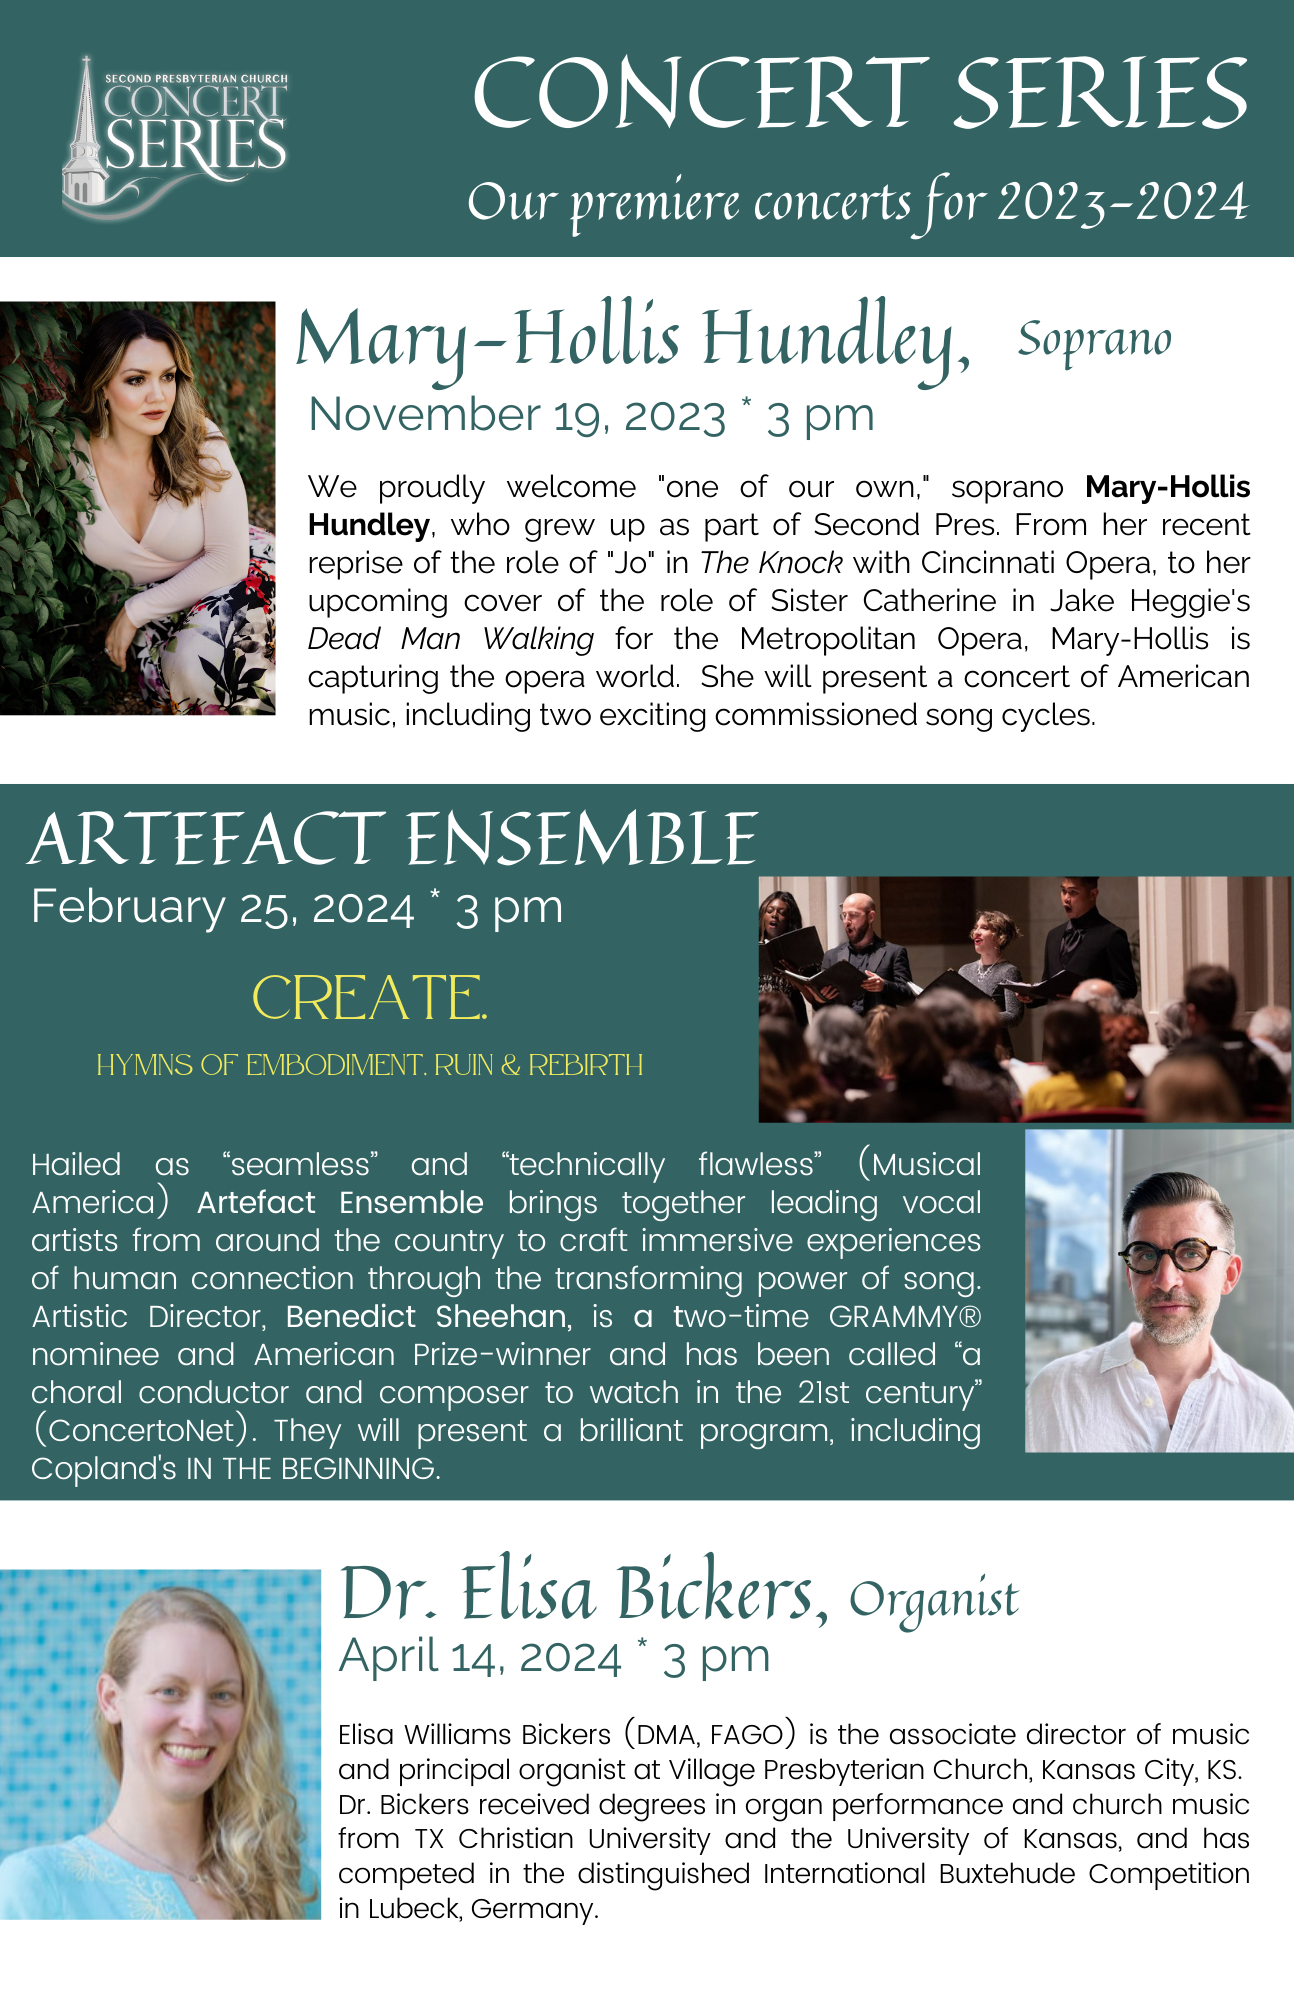 Mary-Hollis Hundley, Artefact Ensemble, Dr. Elisa Bickers